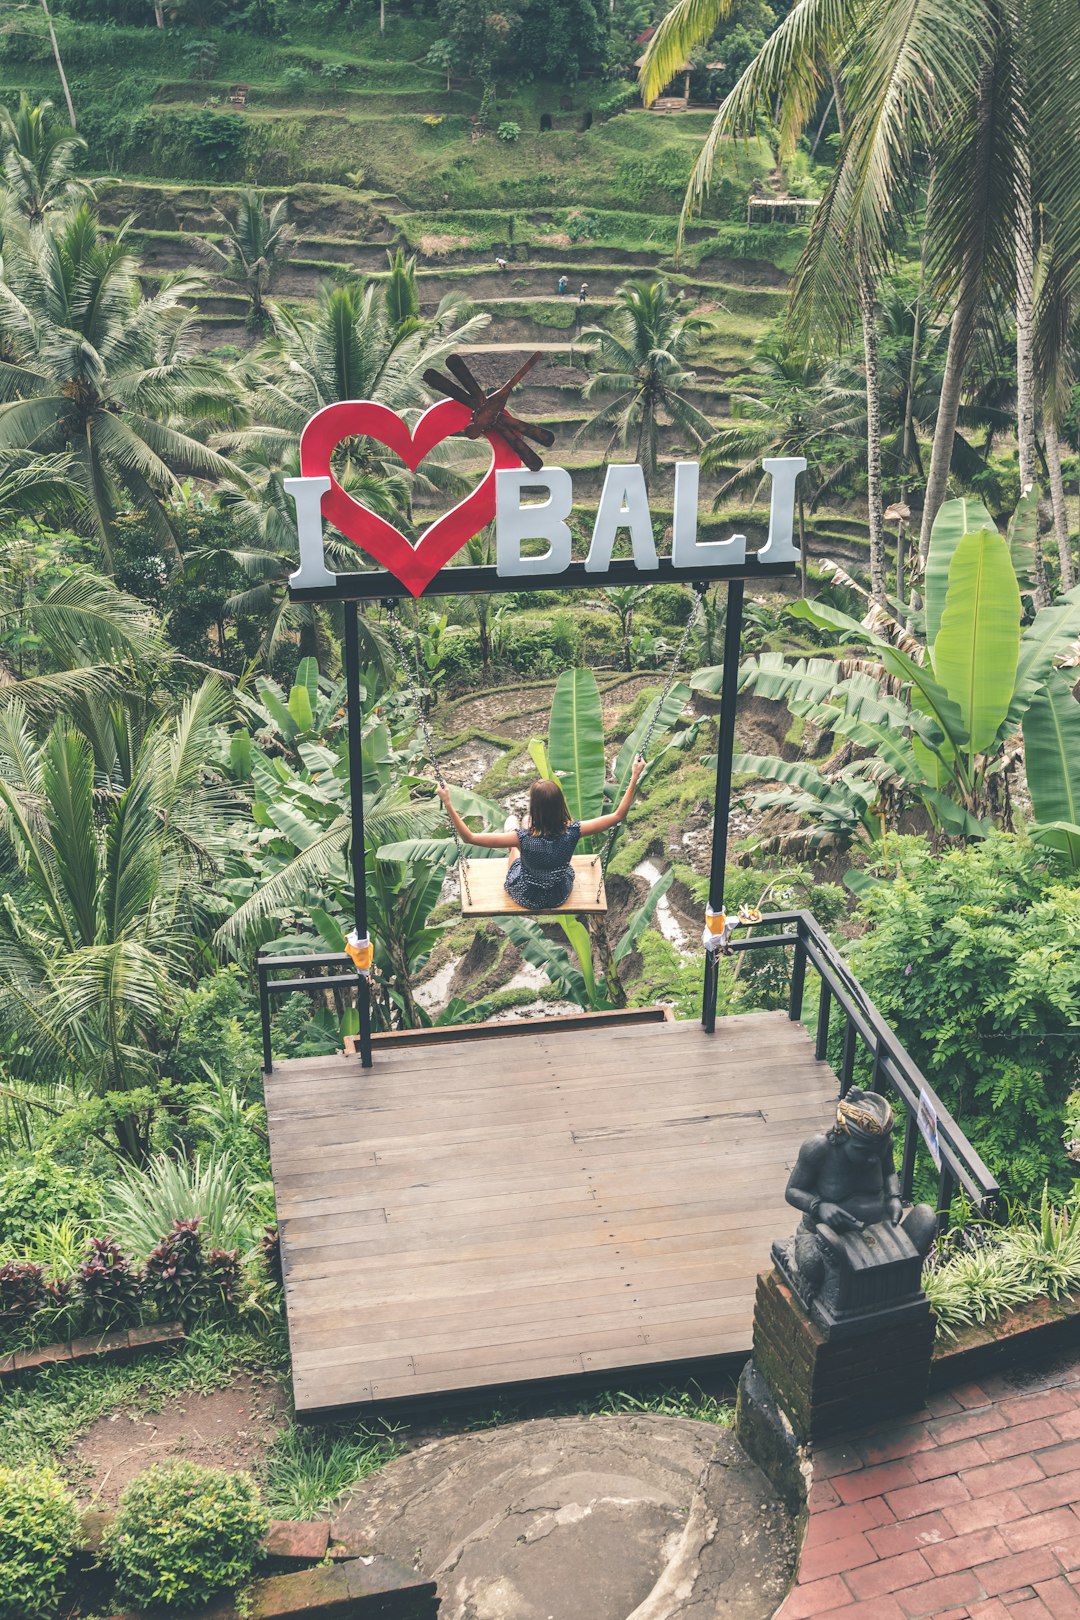 Rainforest photo spot Bali Kecamatan Abiansemal